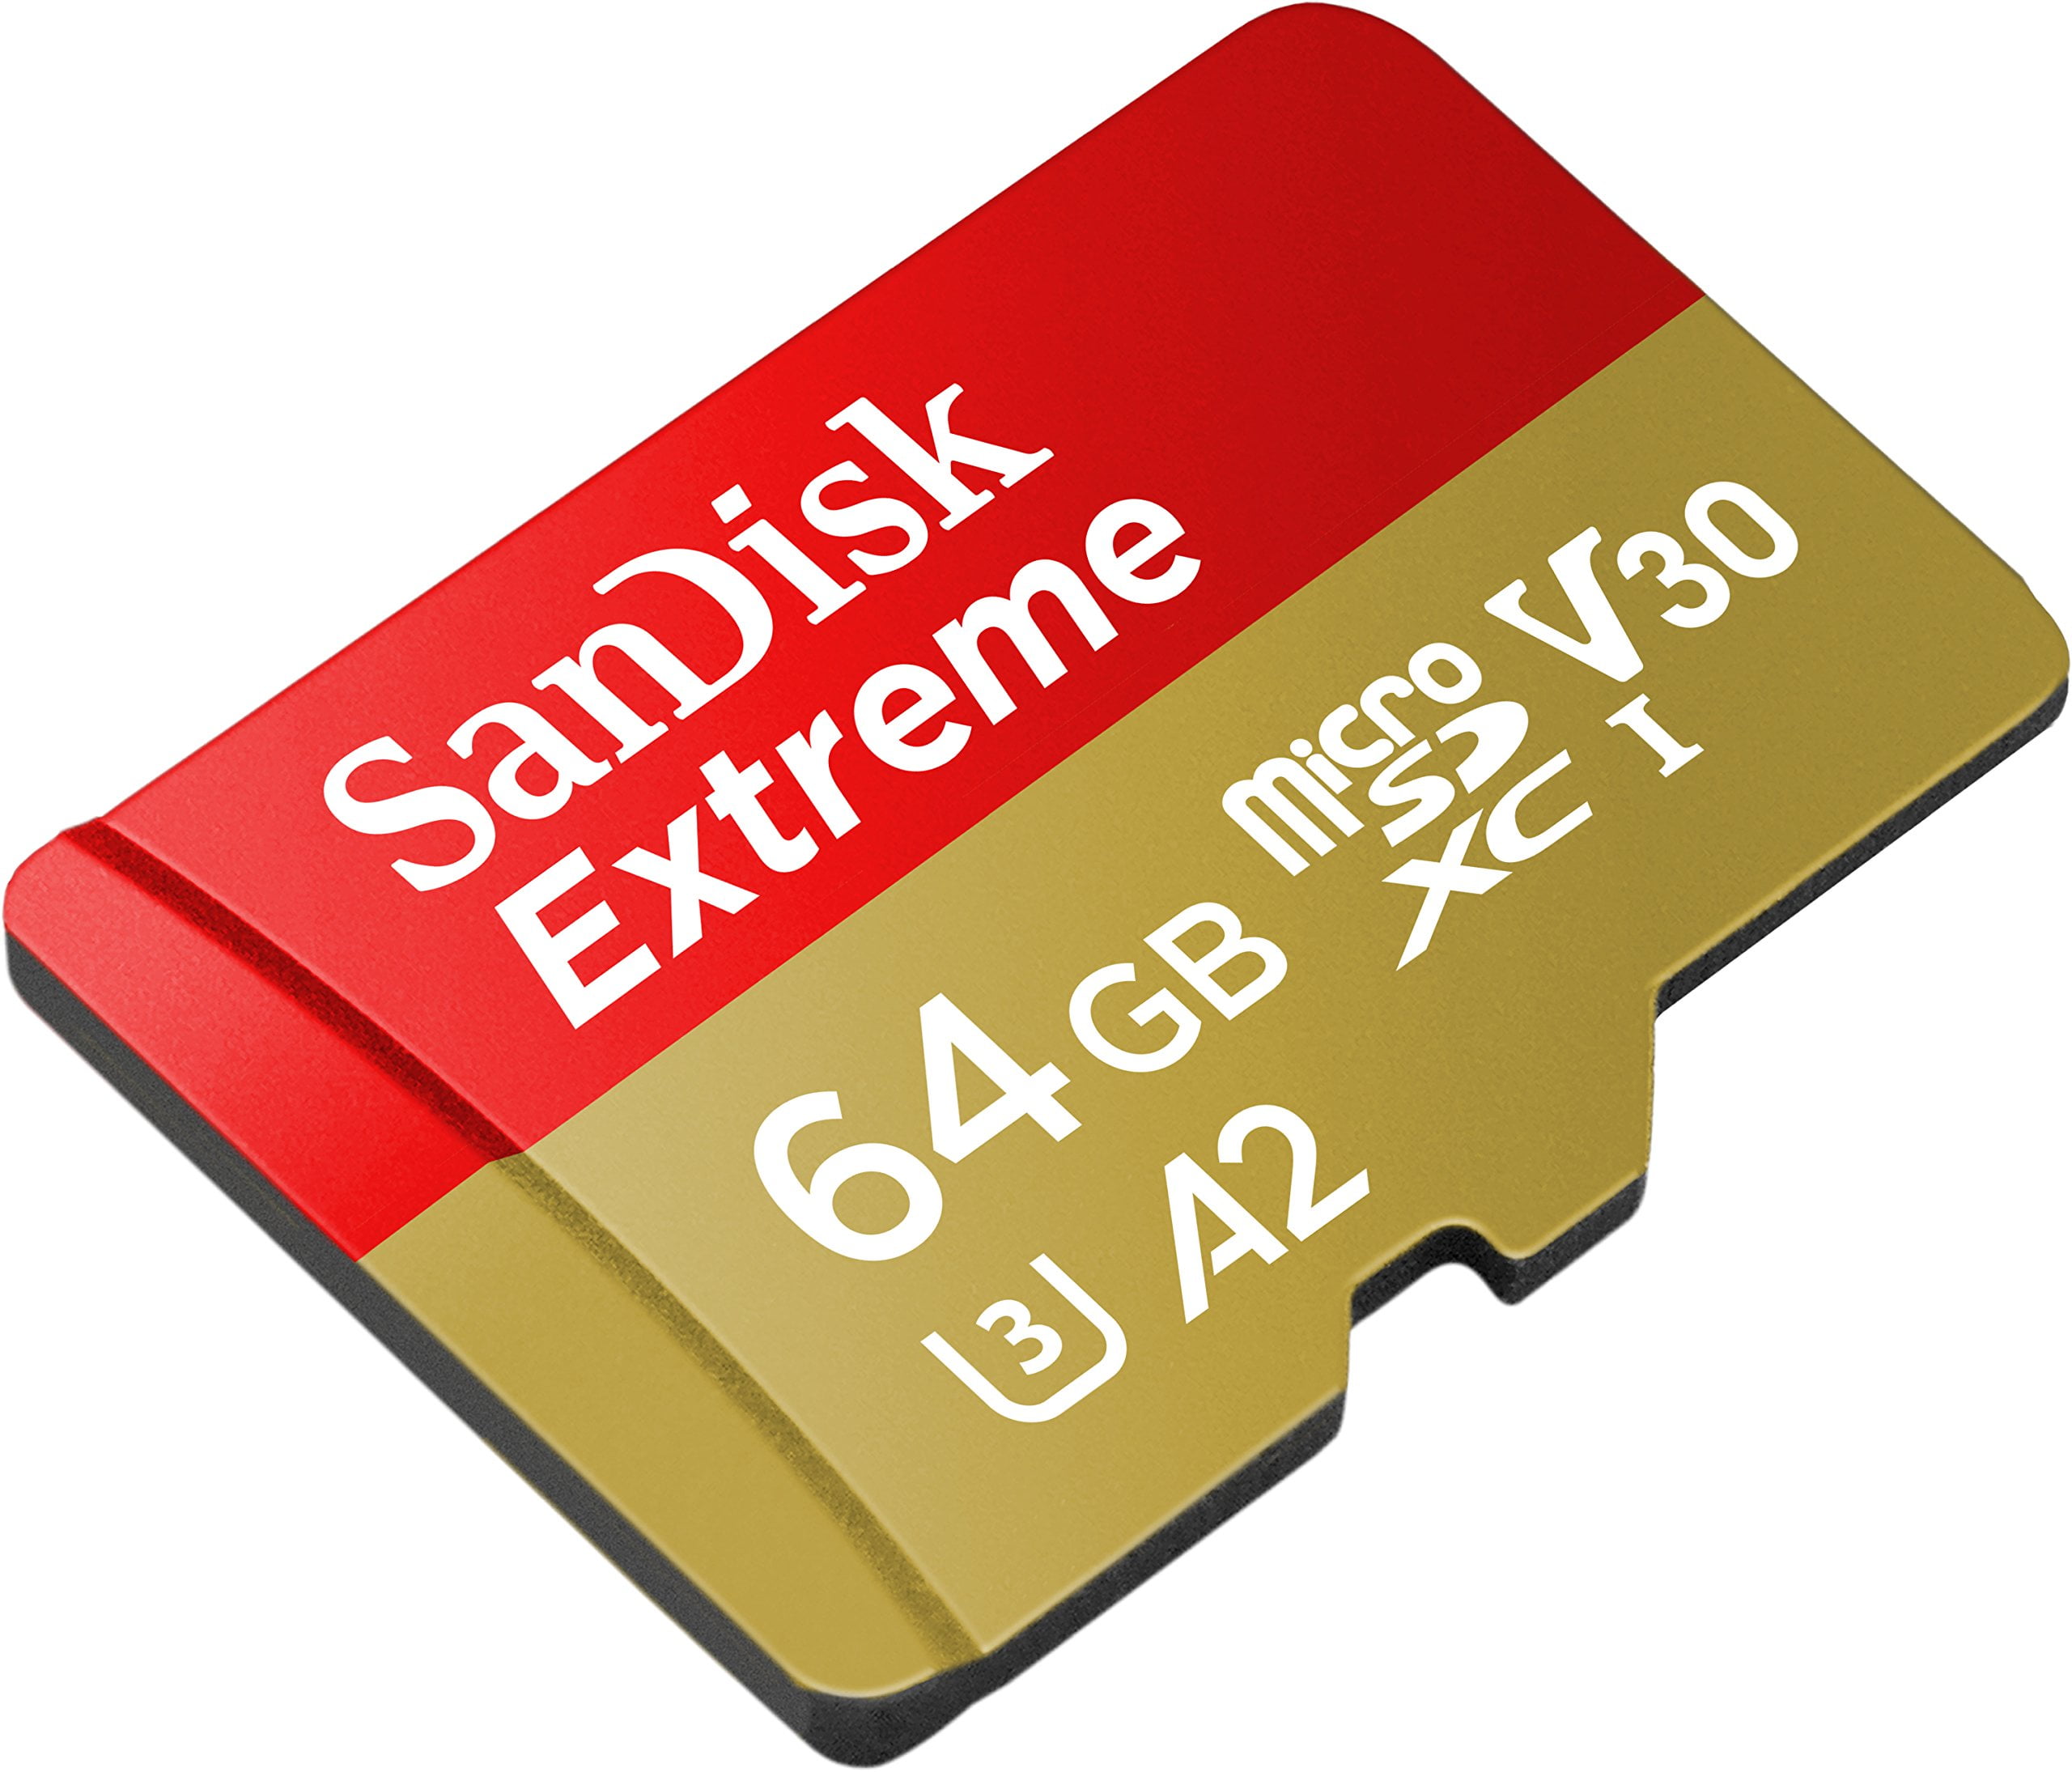 SanDisk 64GB Extreme MicroSDXC UHS-I Memory Card with Adapter - 160MB/s,  U3, V30, 4K UHD, A2, Micro SD Card - SDSQXA2-064G-GN6MA 